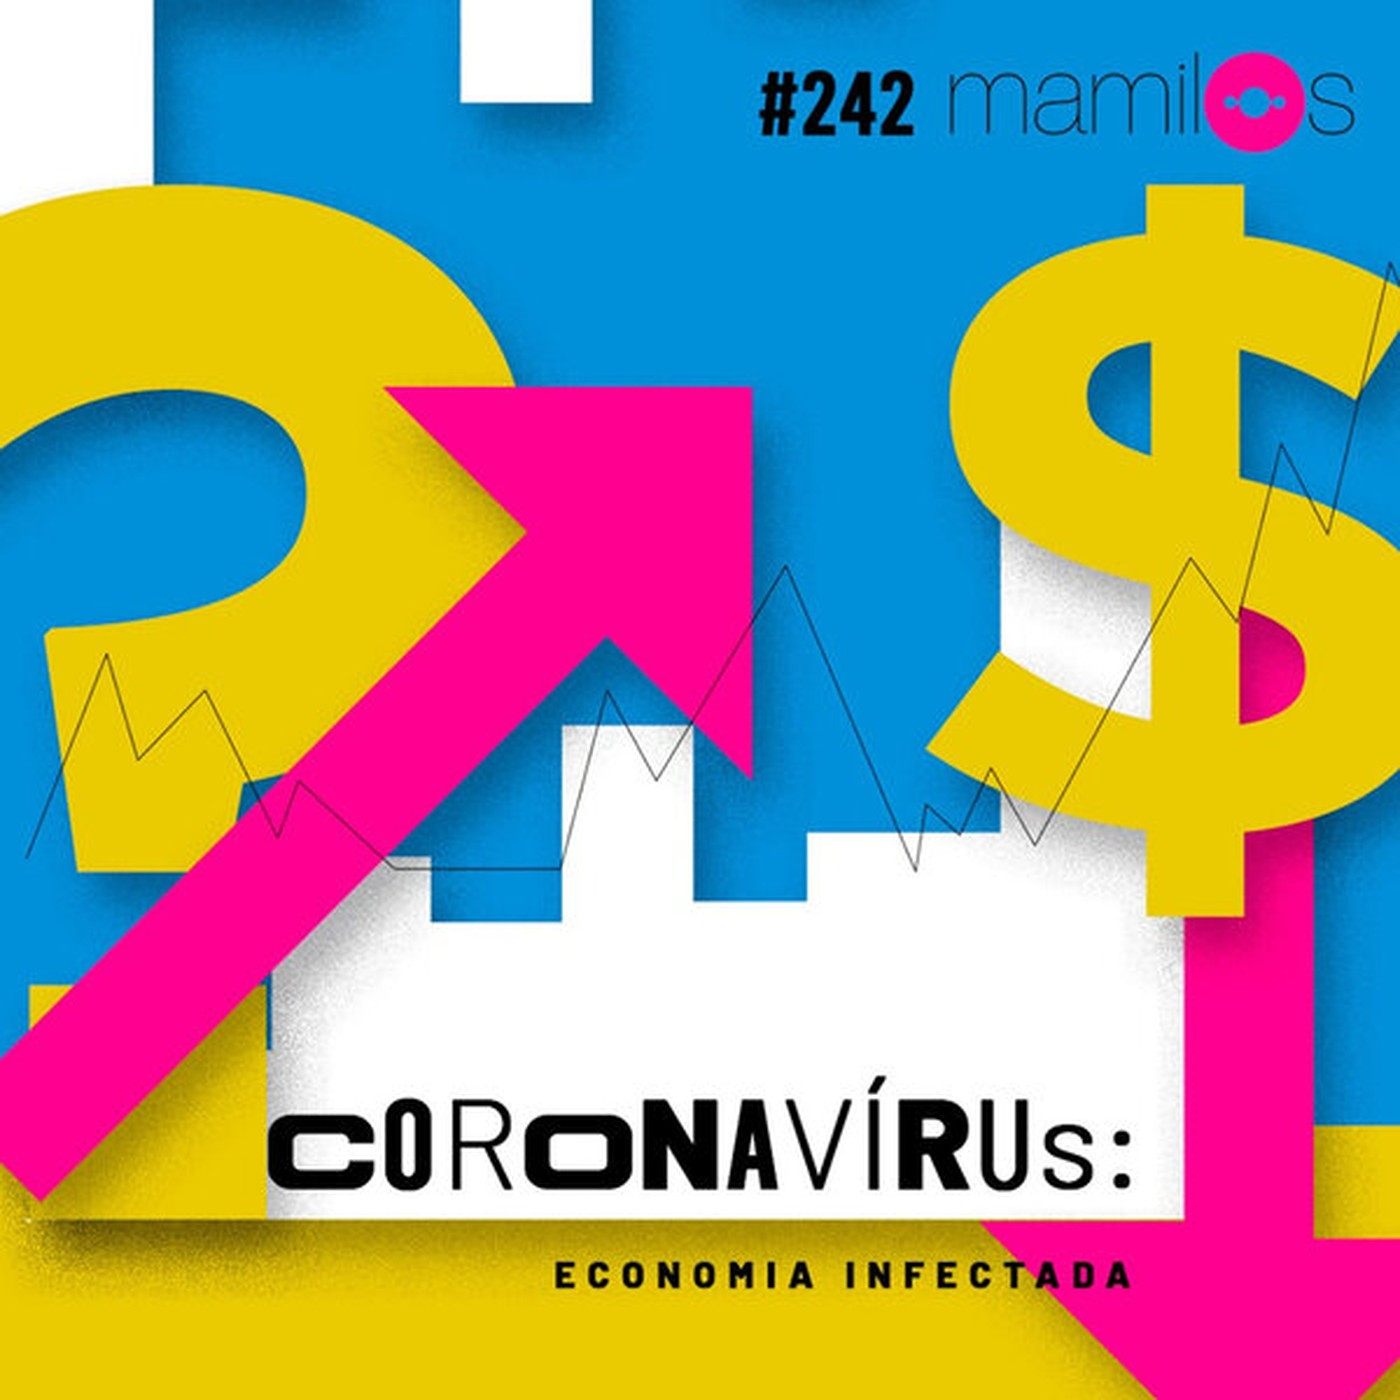 Coronavírus: economia infectada